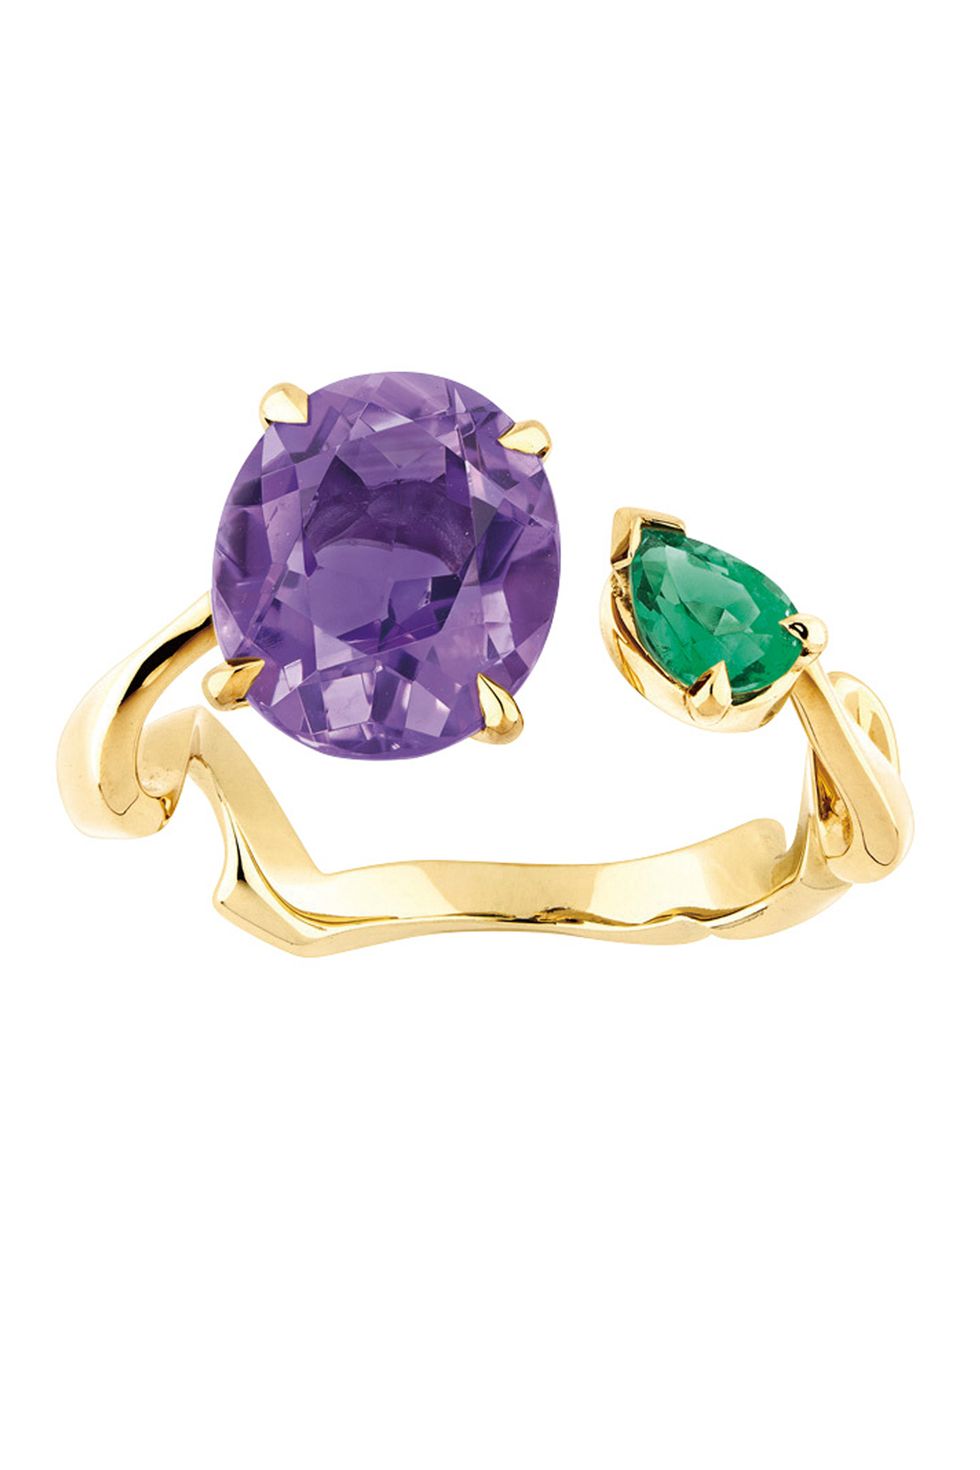 Amethyst, Jewellery, Gemstone, Fashion accessory, Ring, Purple, Turquoise, Yellow, Violet, Emerald, 